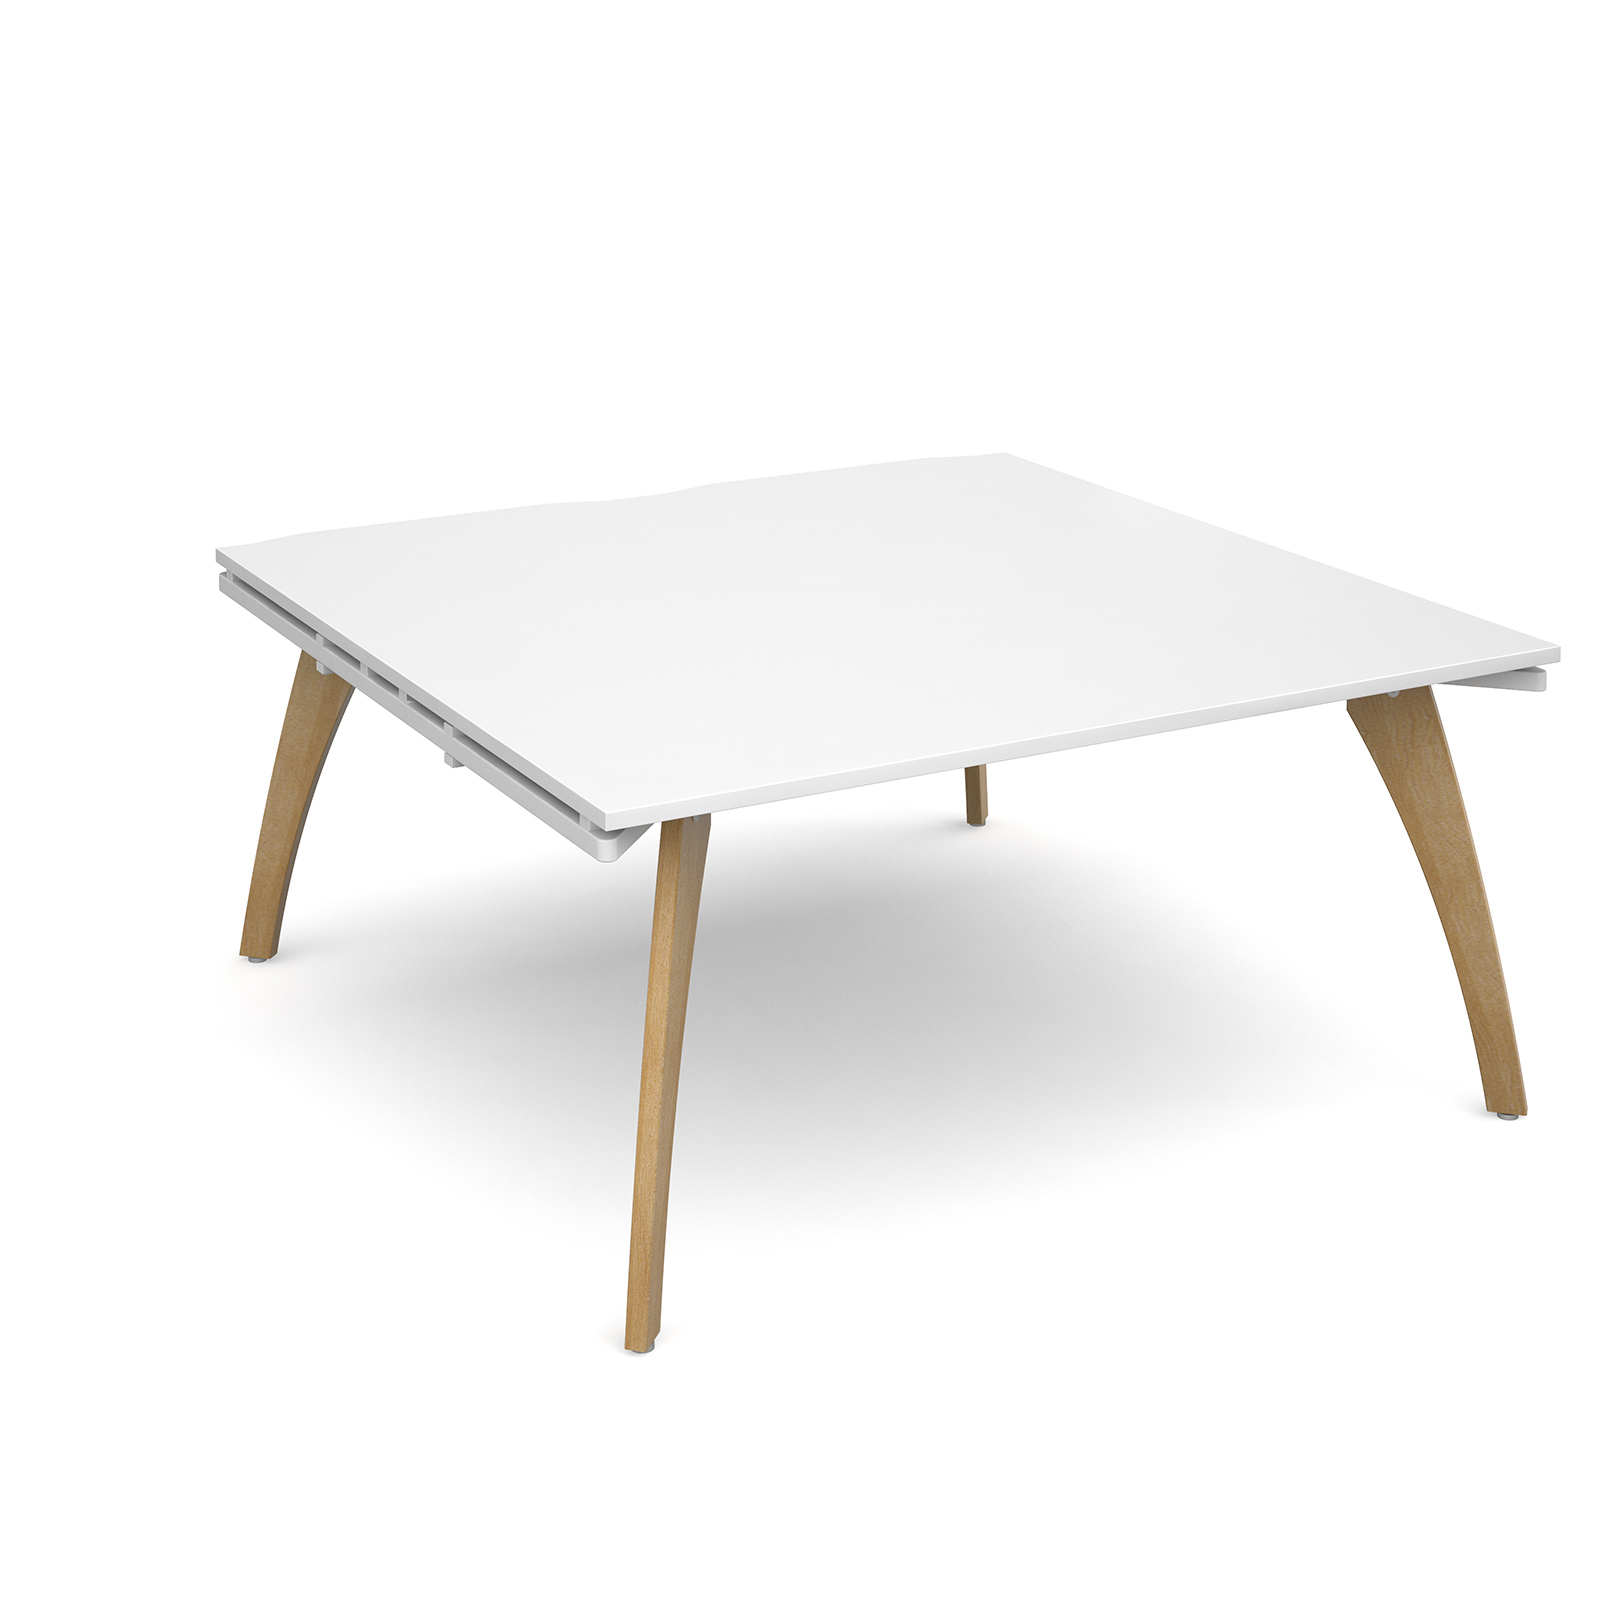 Fuze boardroom table starter unit 1600mm x 1600mm - white frame, white top